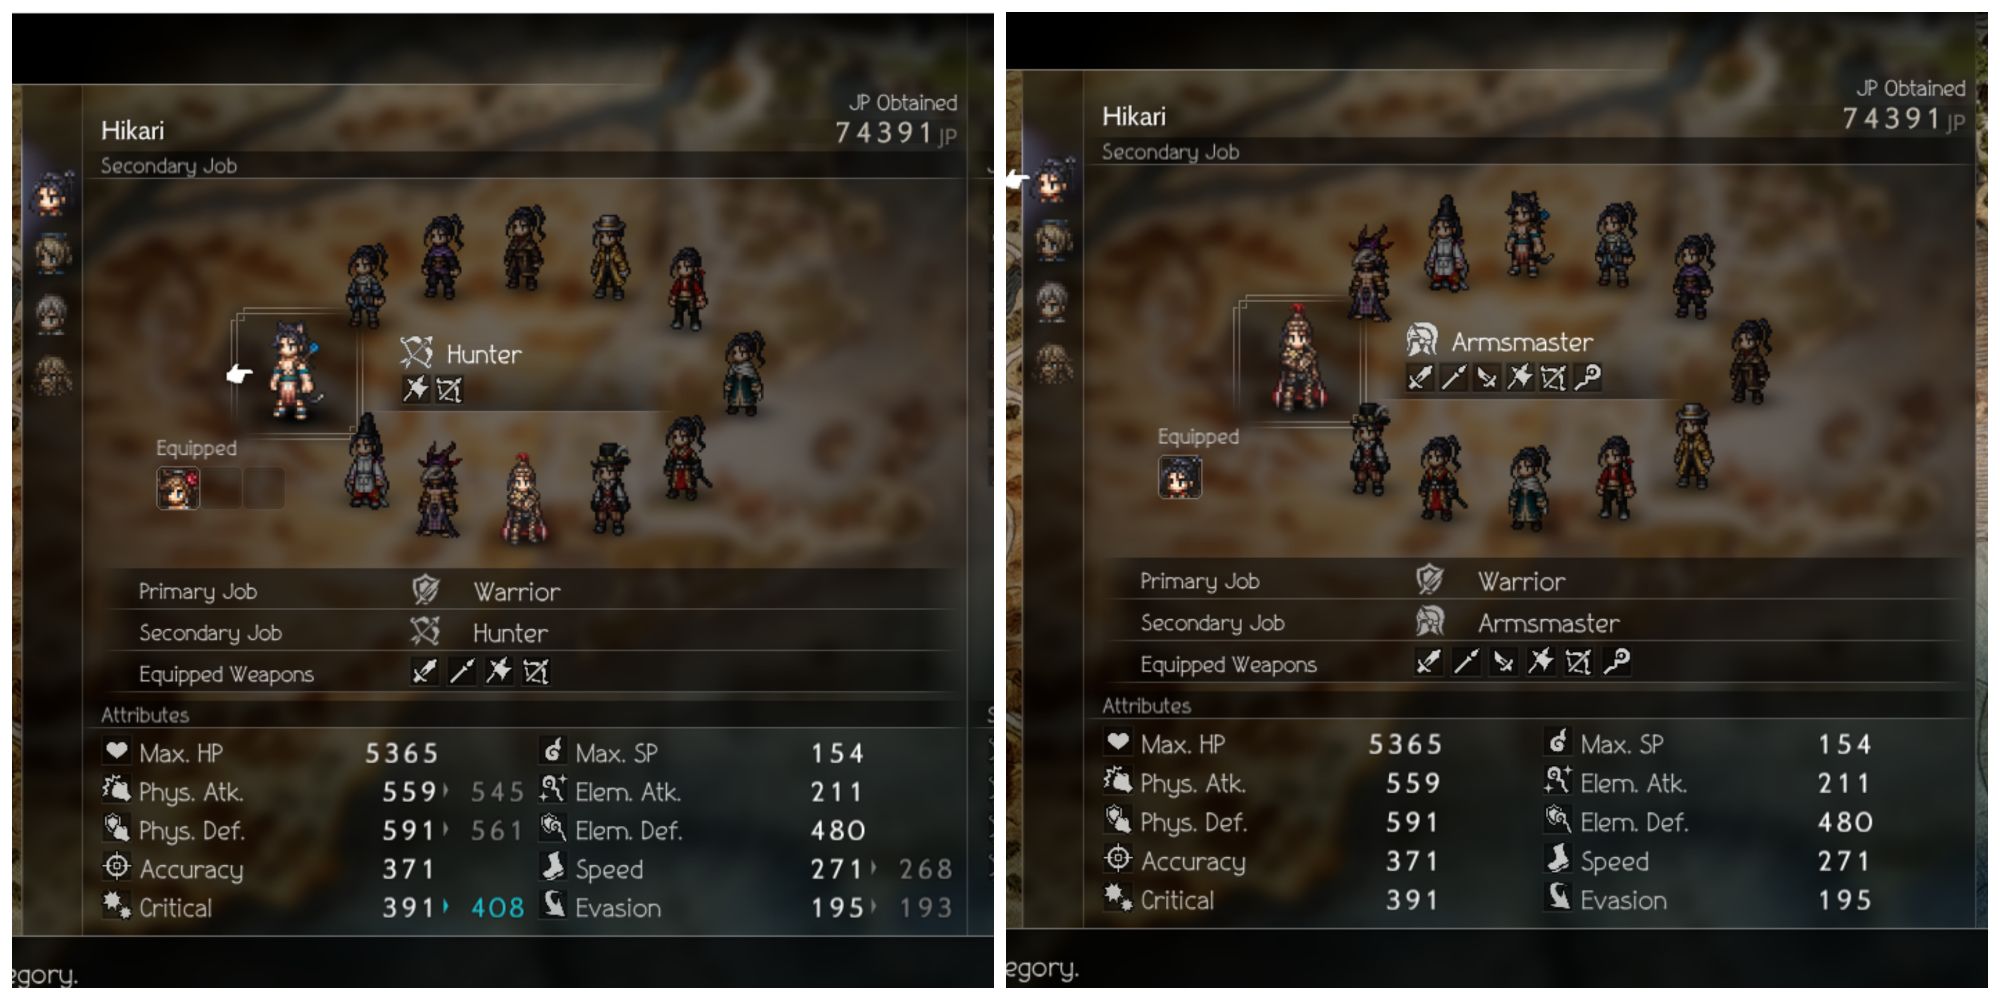 Hikari'S Side Job Choices In Octopath Traveler 2, Hunter And Armsmaster